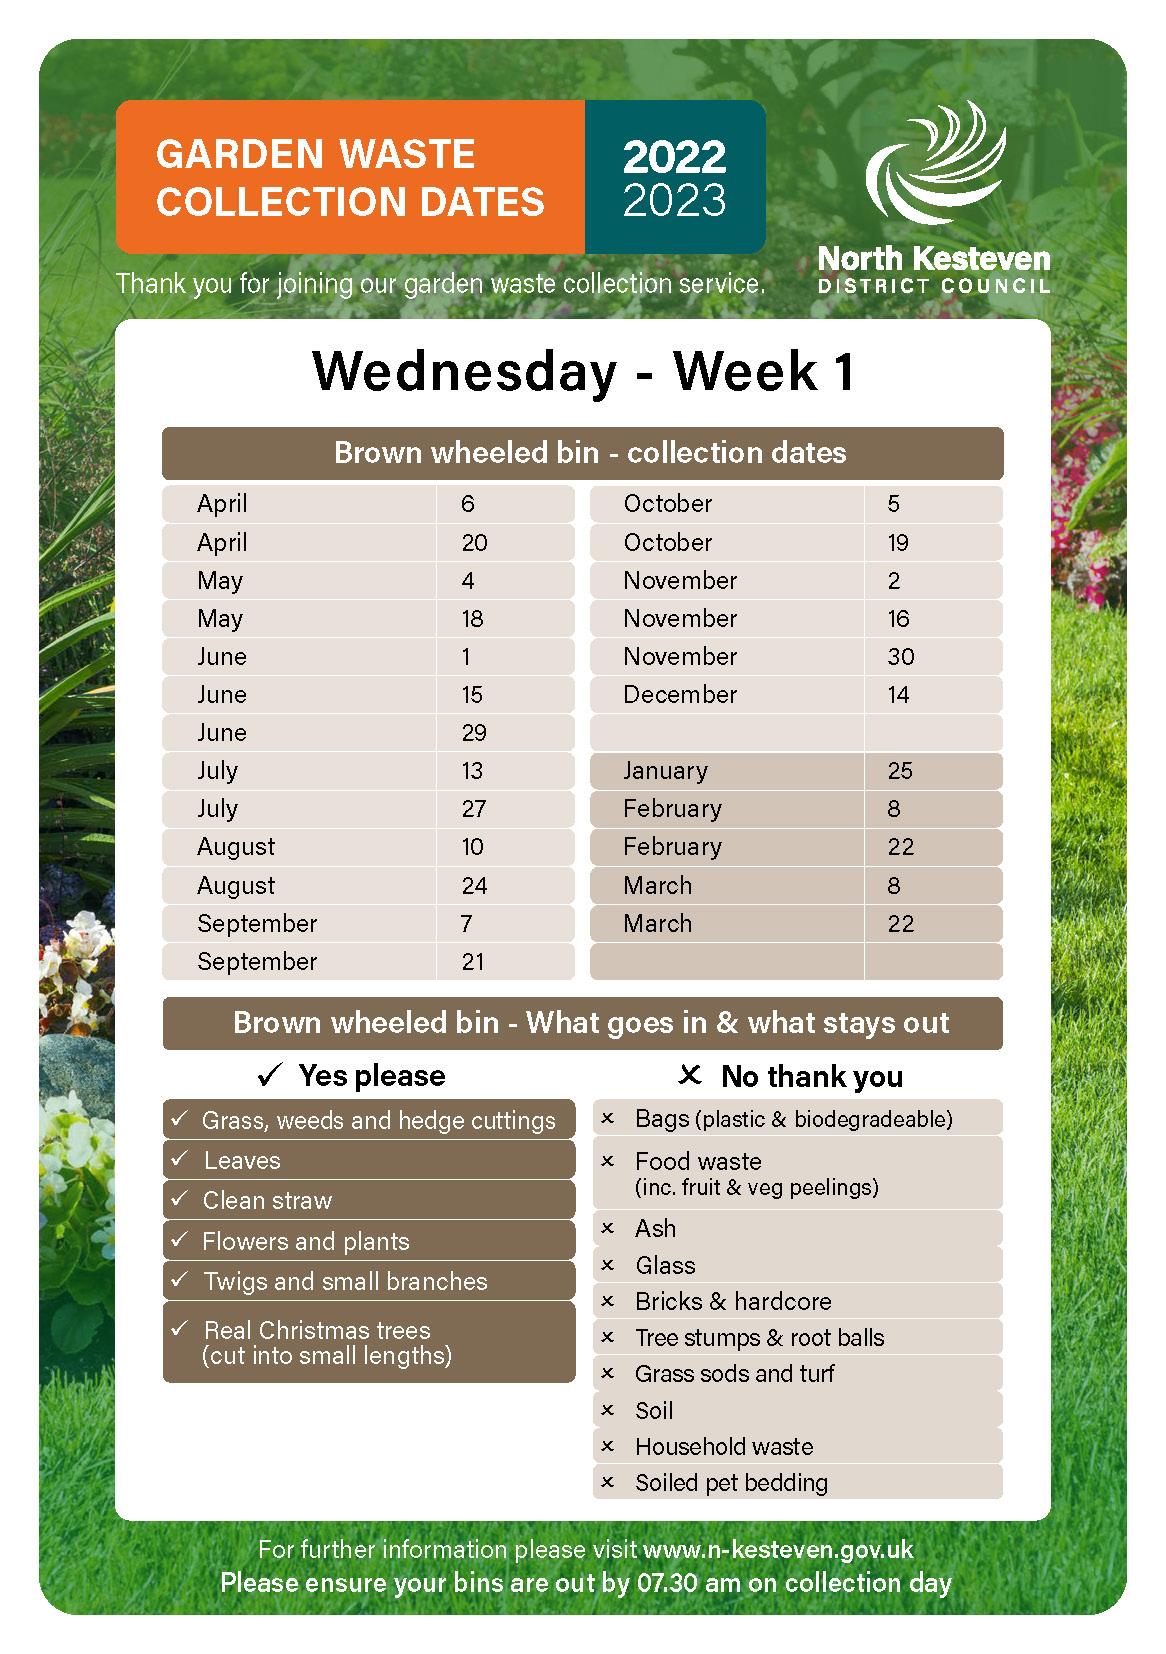 Brown bin week1 Wednesday